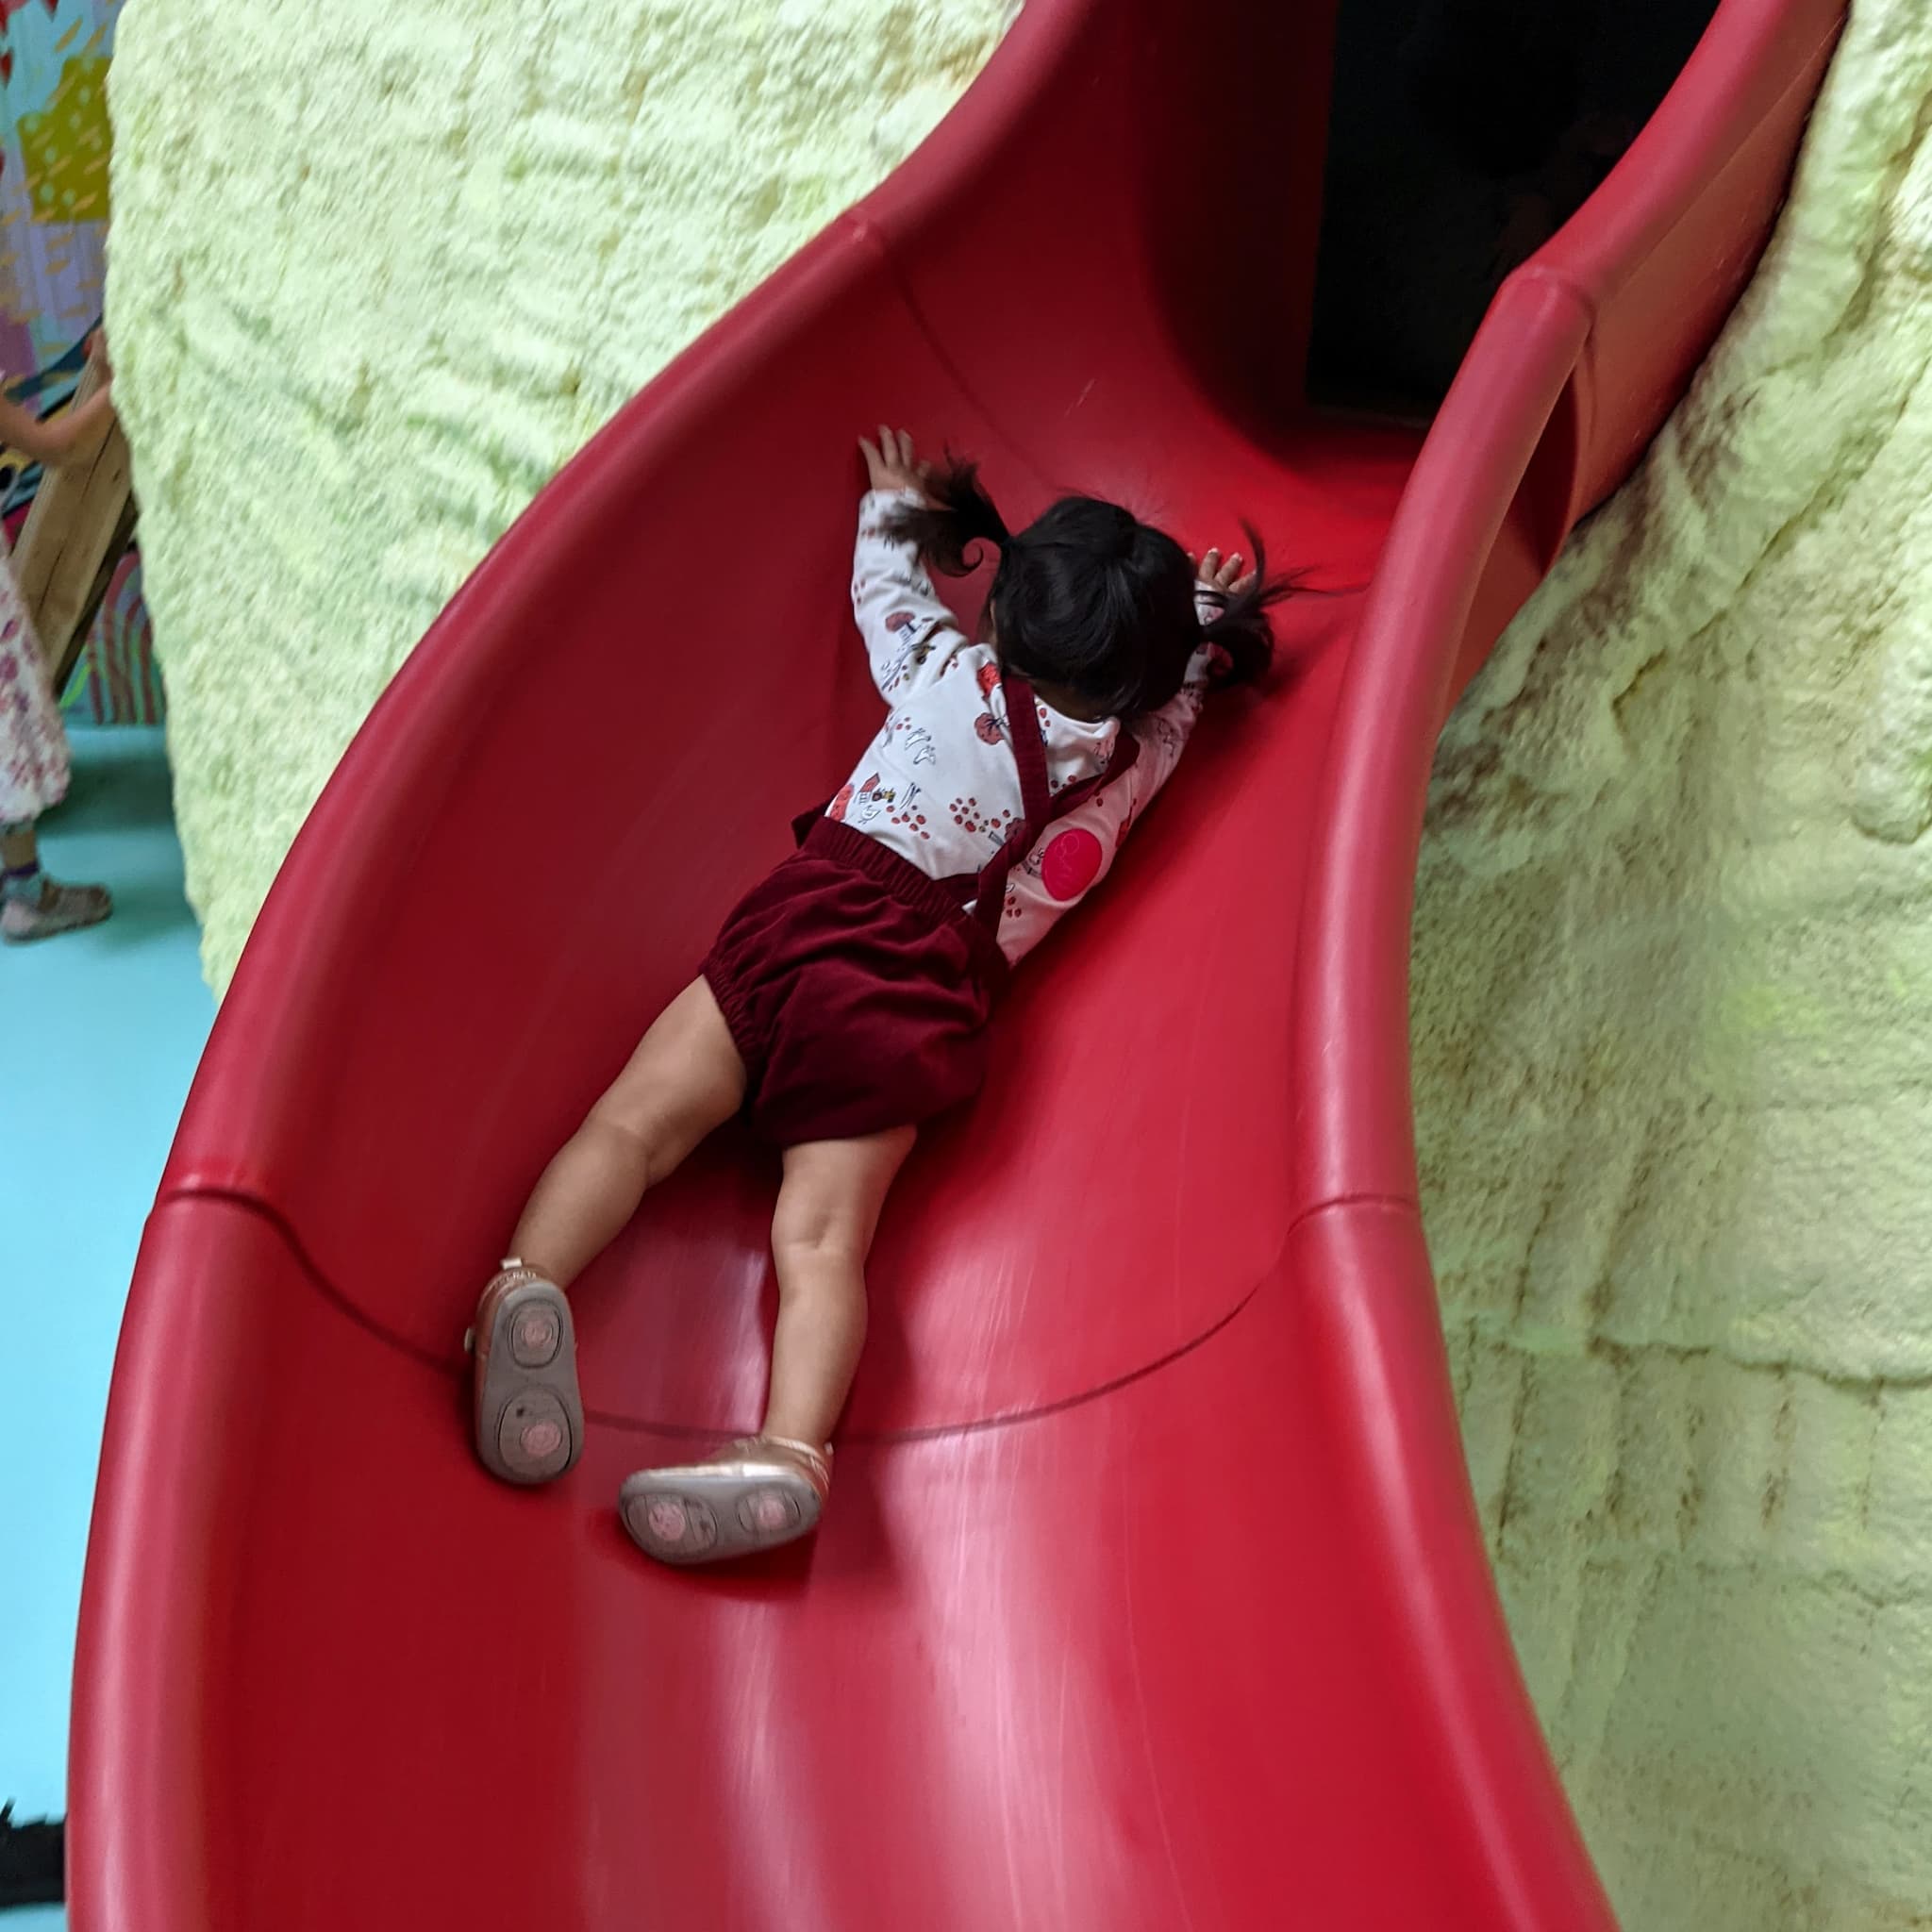 Baby girl sliding down a slide on her belly.